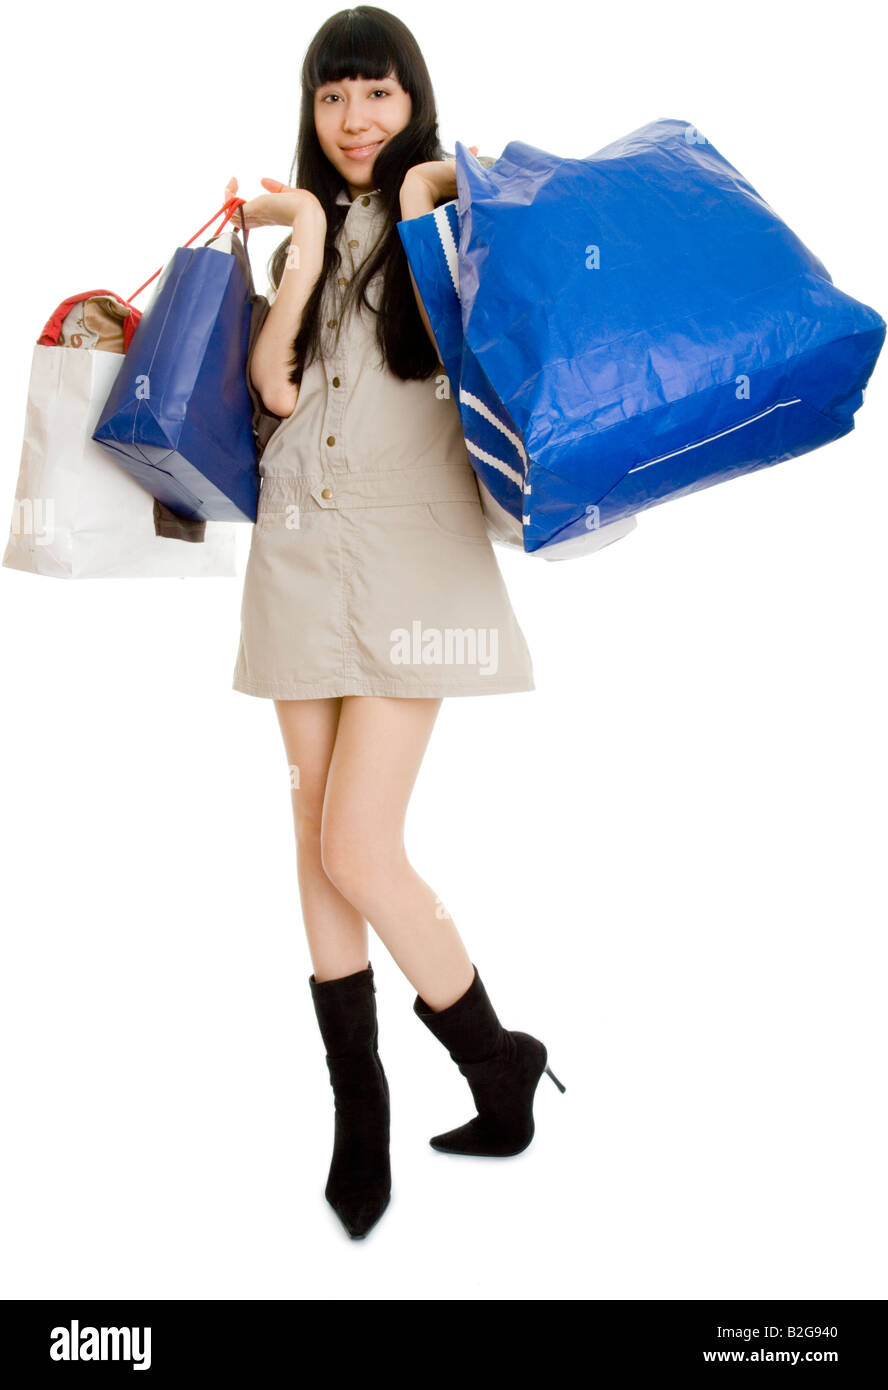 Shopping bags Fashion trendy vogue chic fancy voguish model woman young Stock Photo